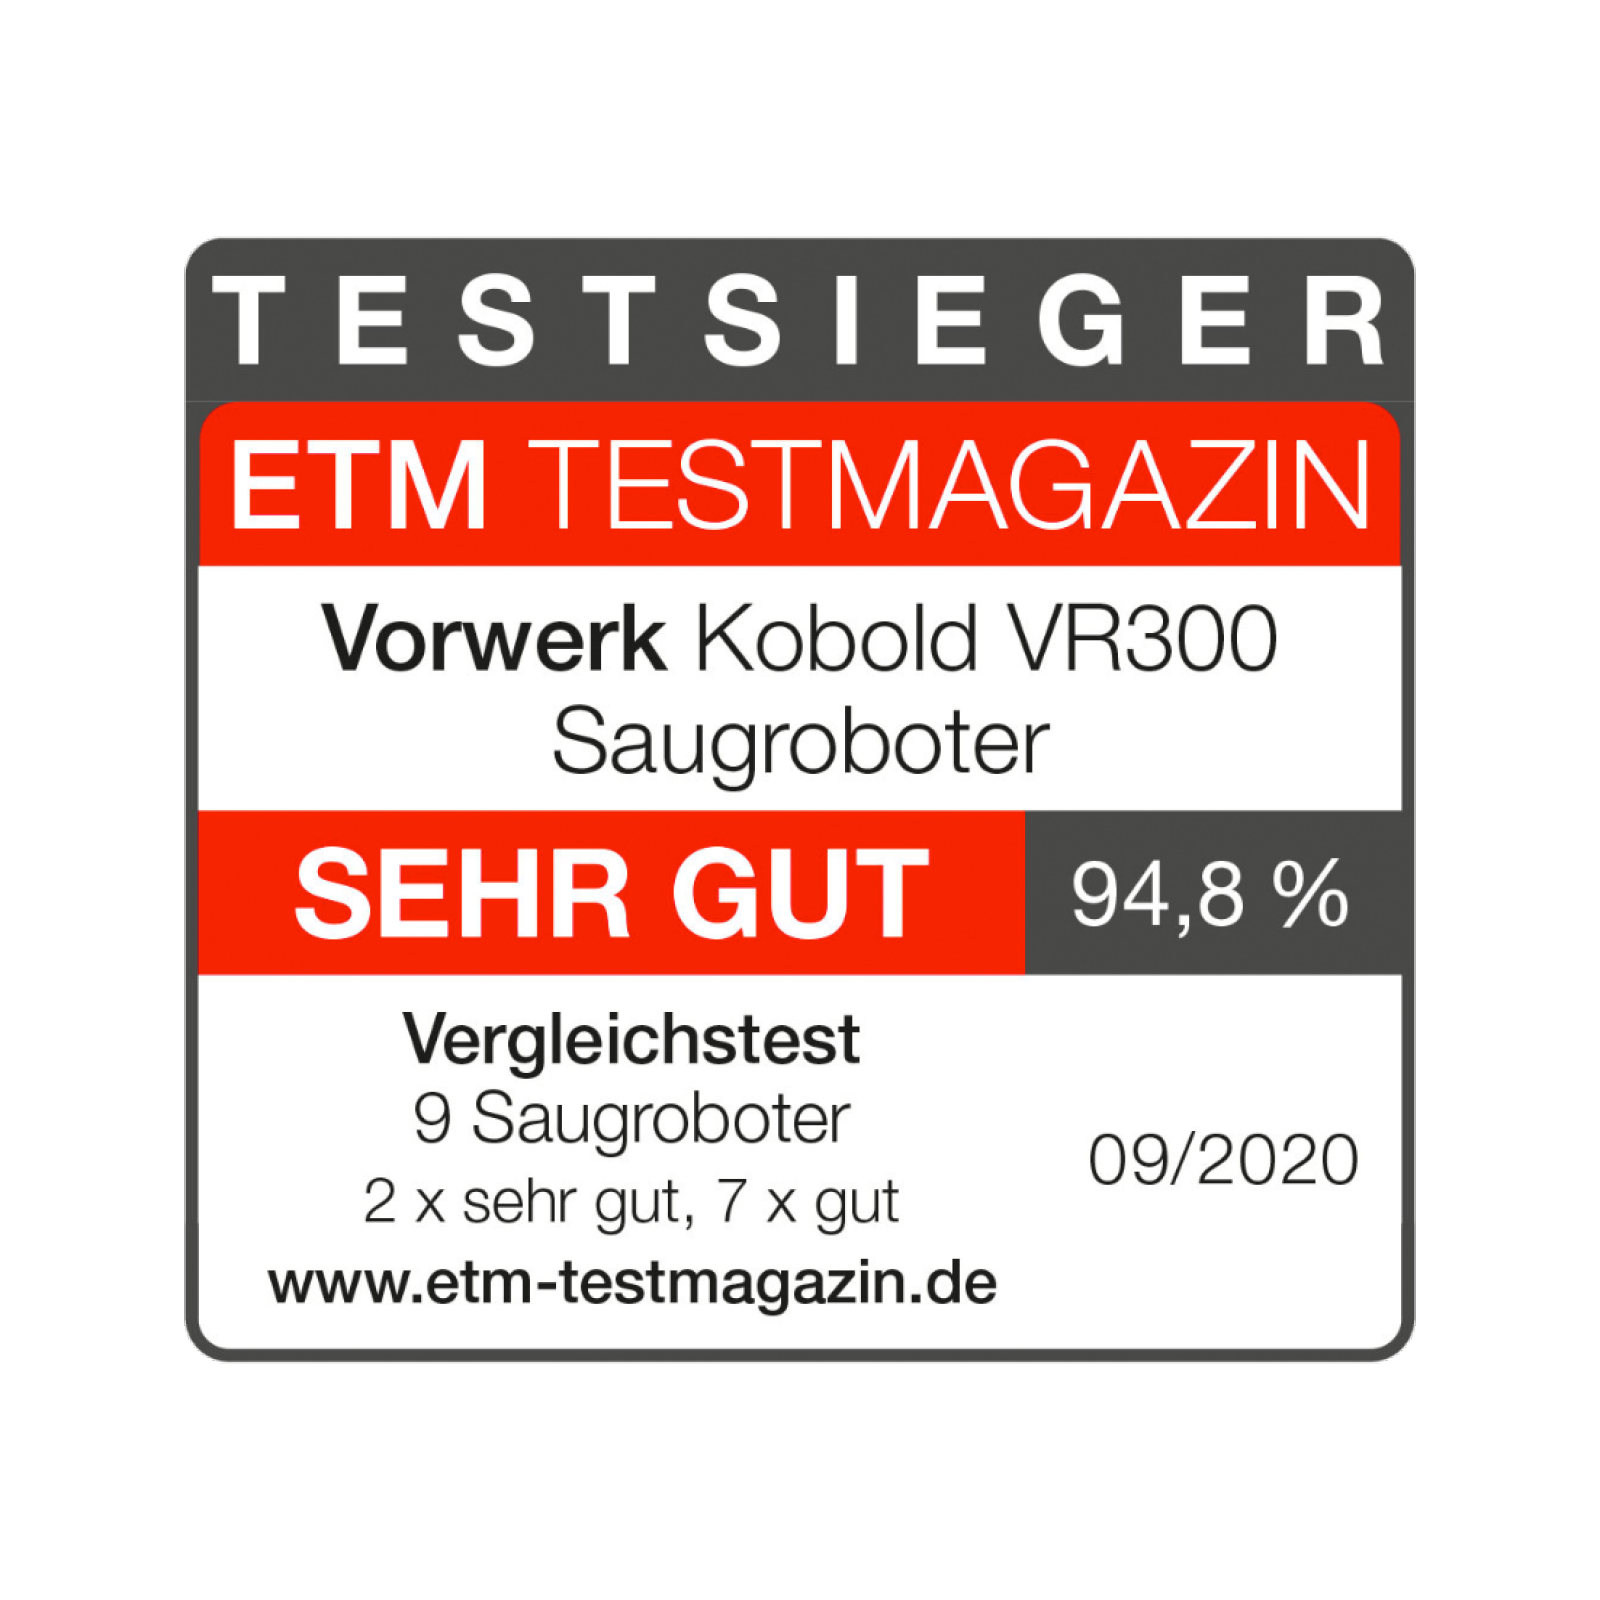 Kobold VR300 Saugroboter: Testsieger ETM Testmagazin